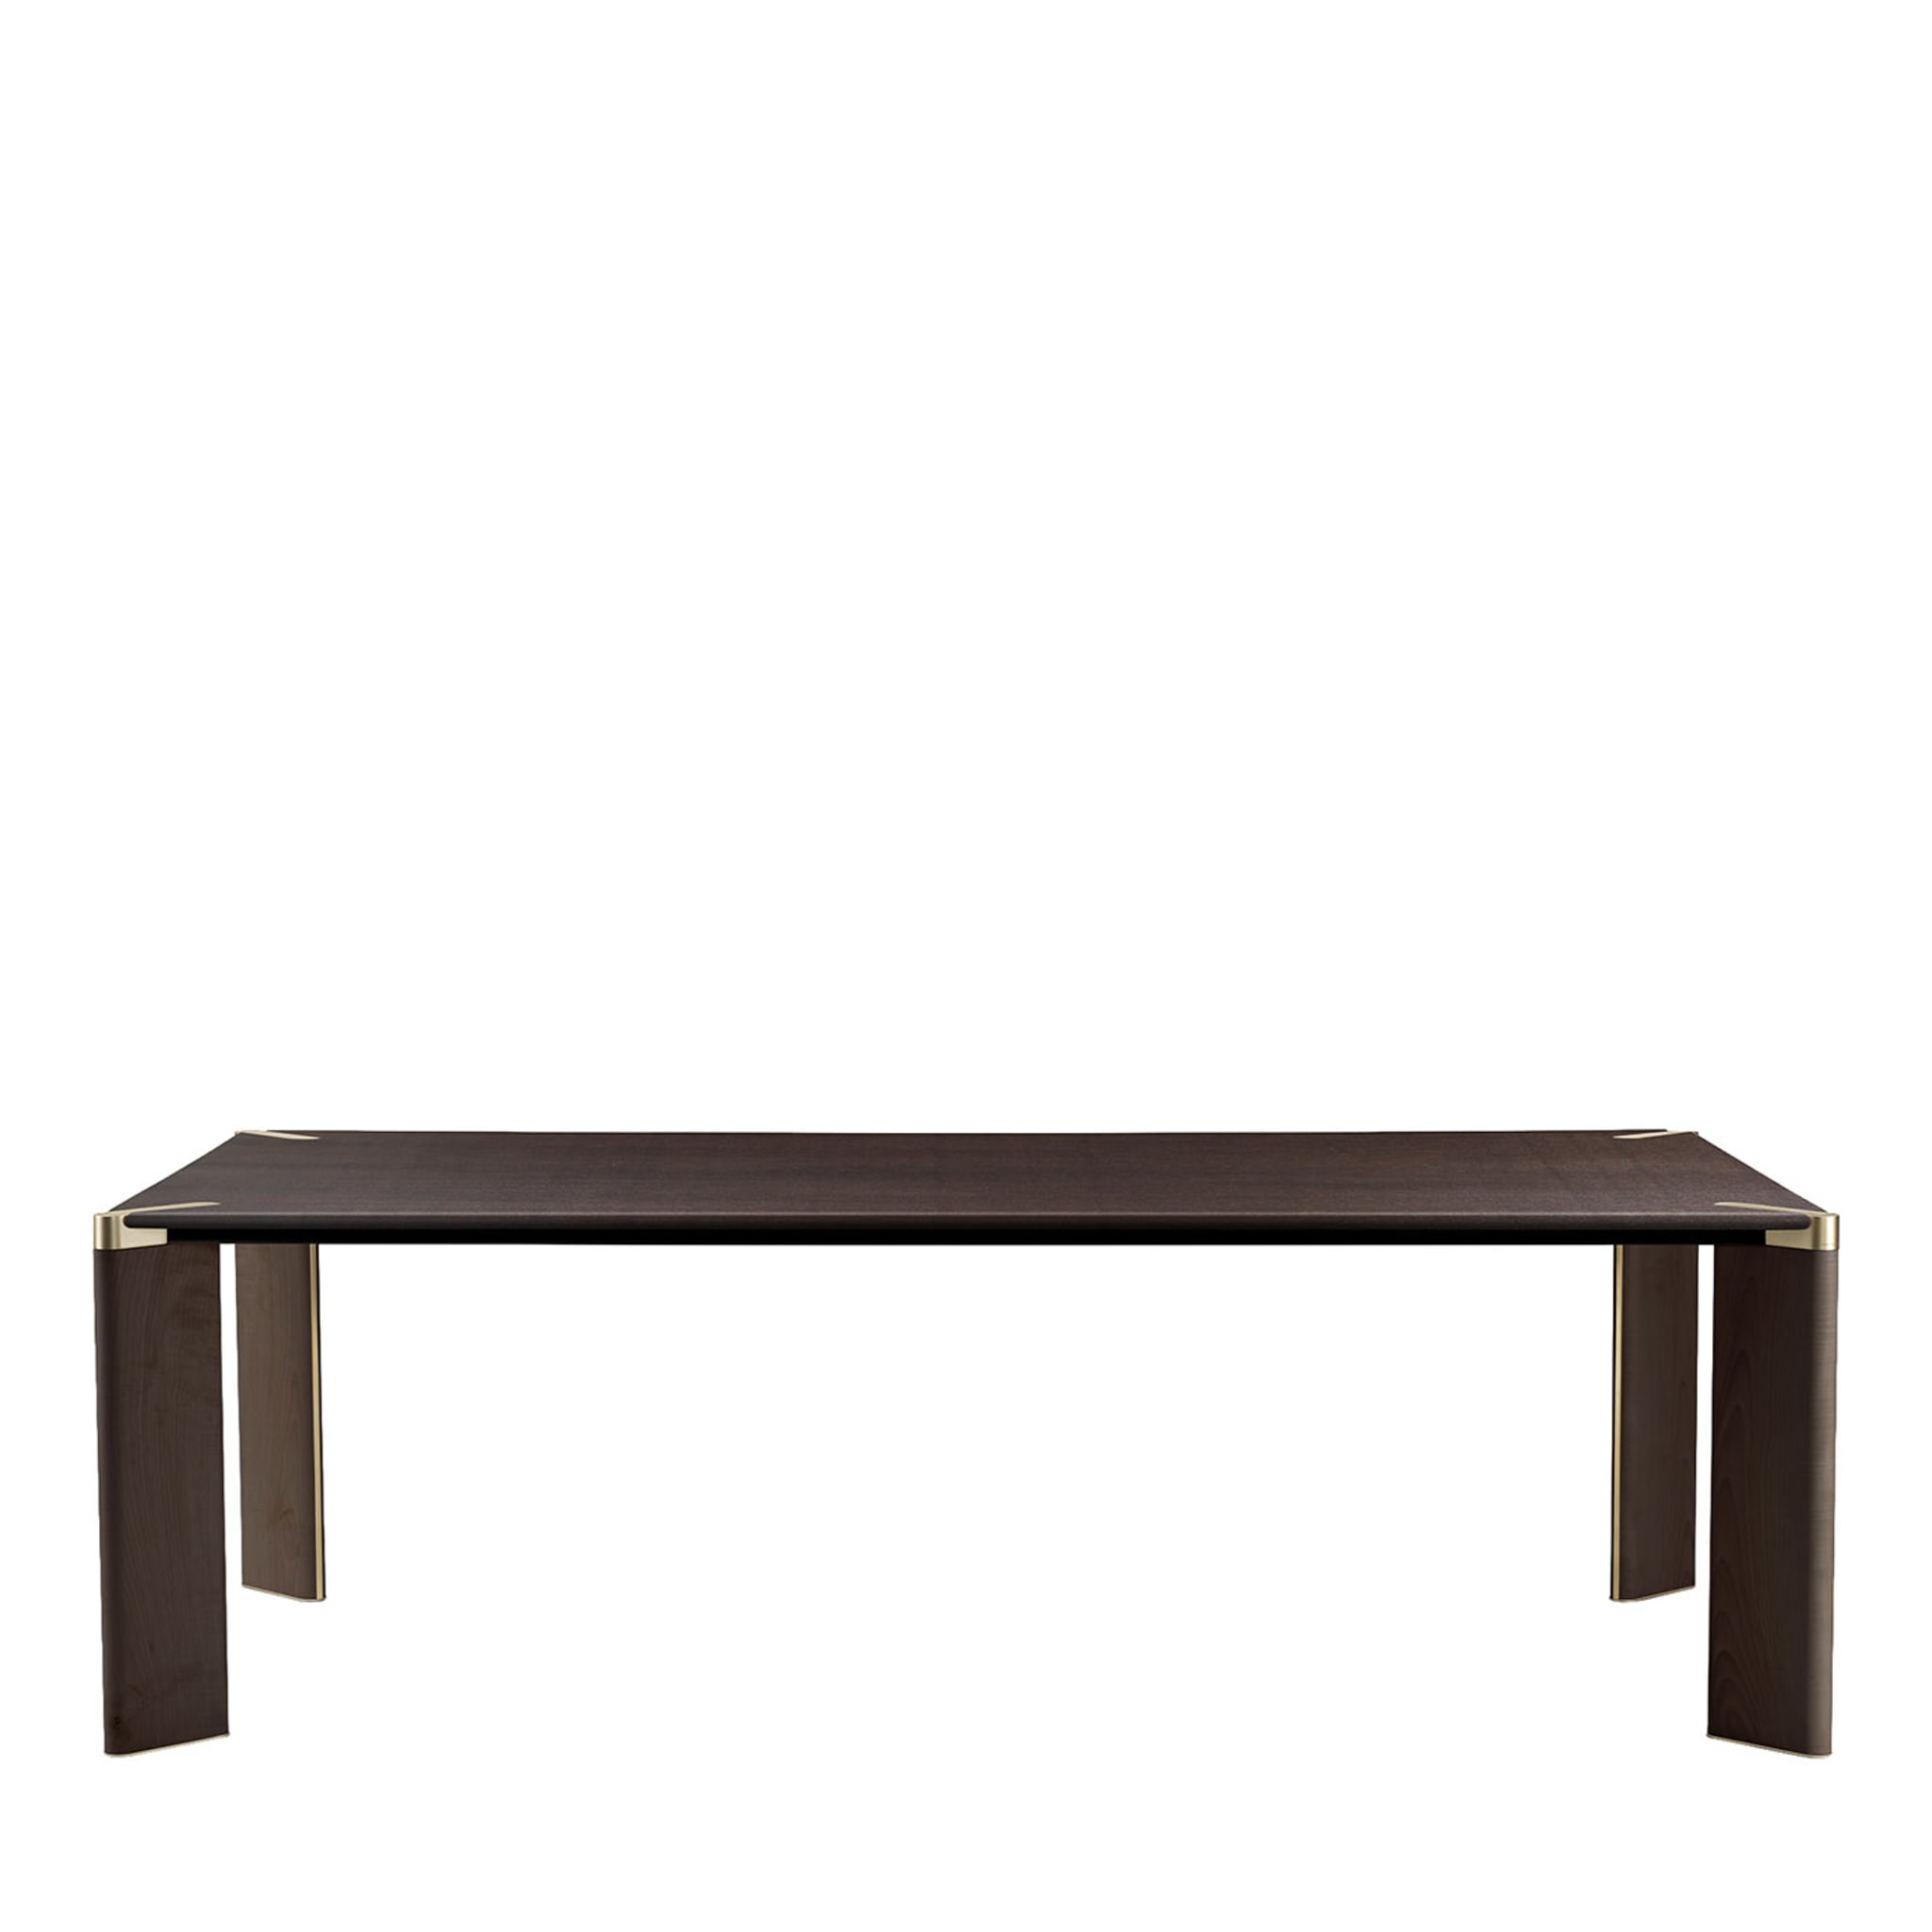 Ottanta Rectangular Wooden Dining Table by Lorenza Bozzoli - Main view